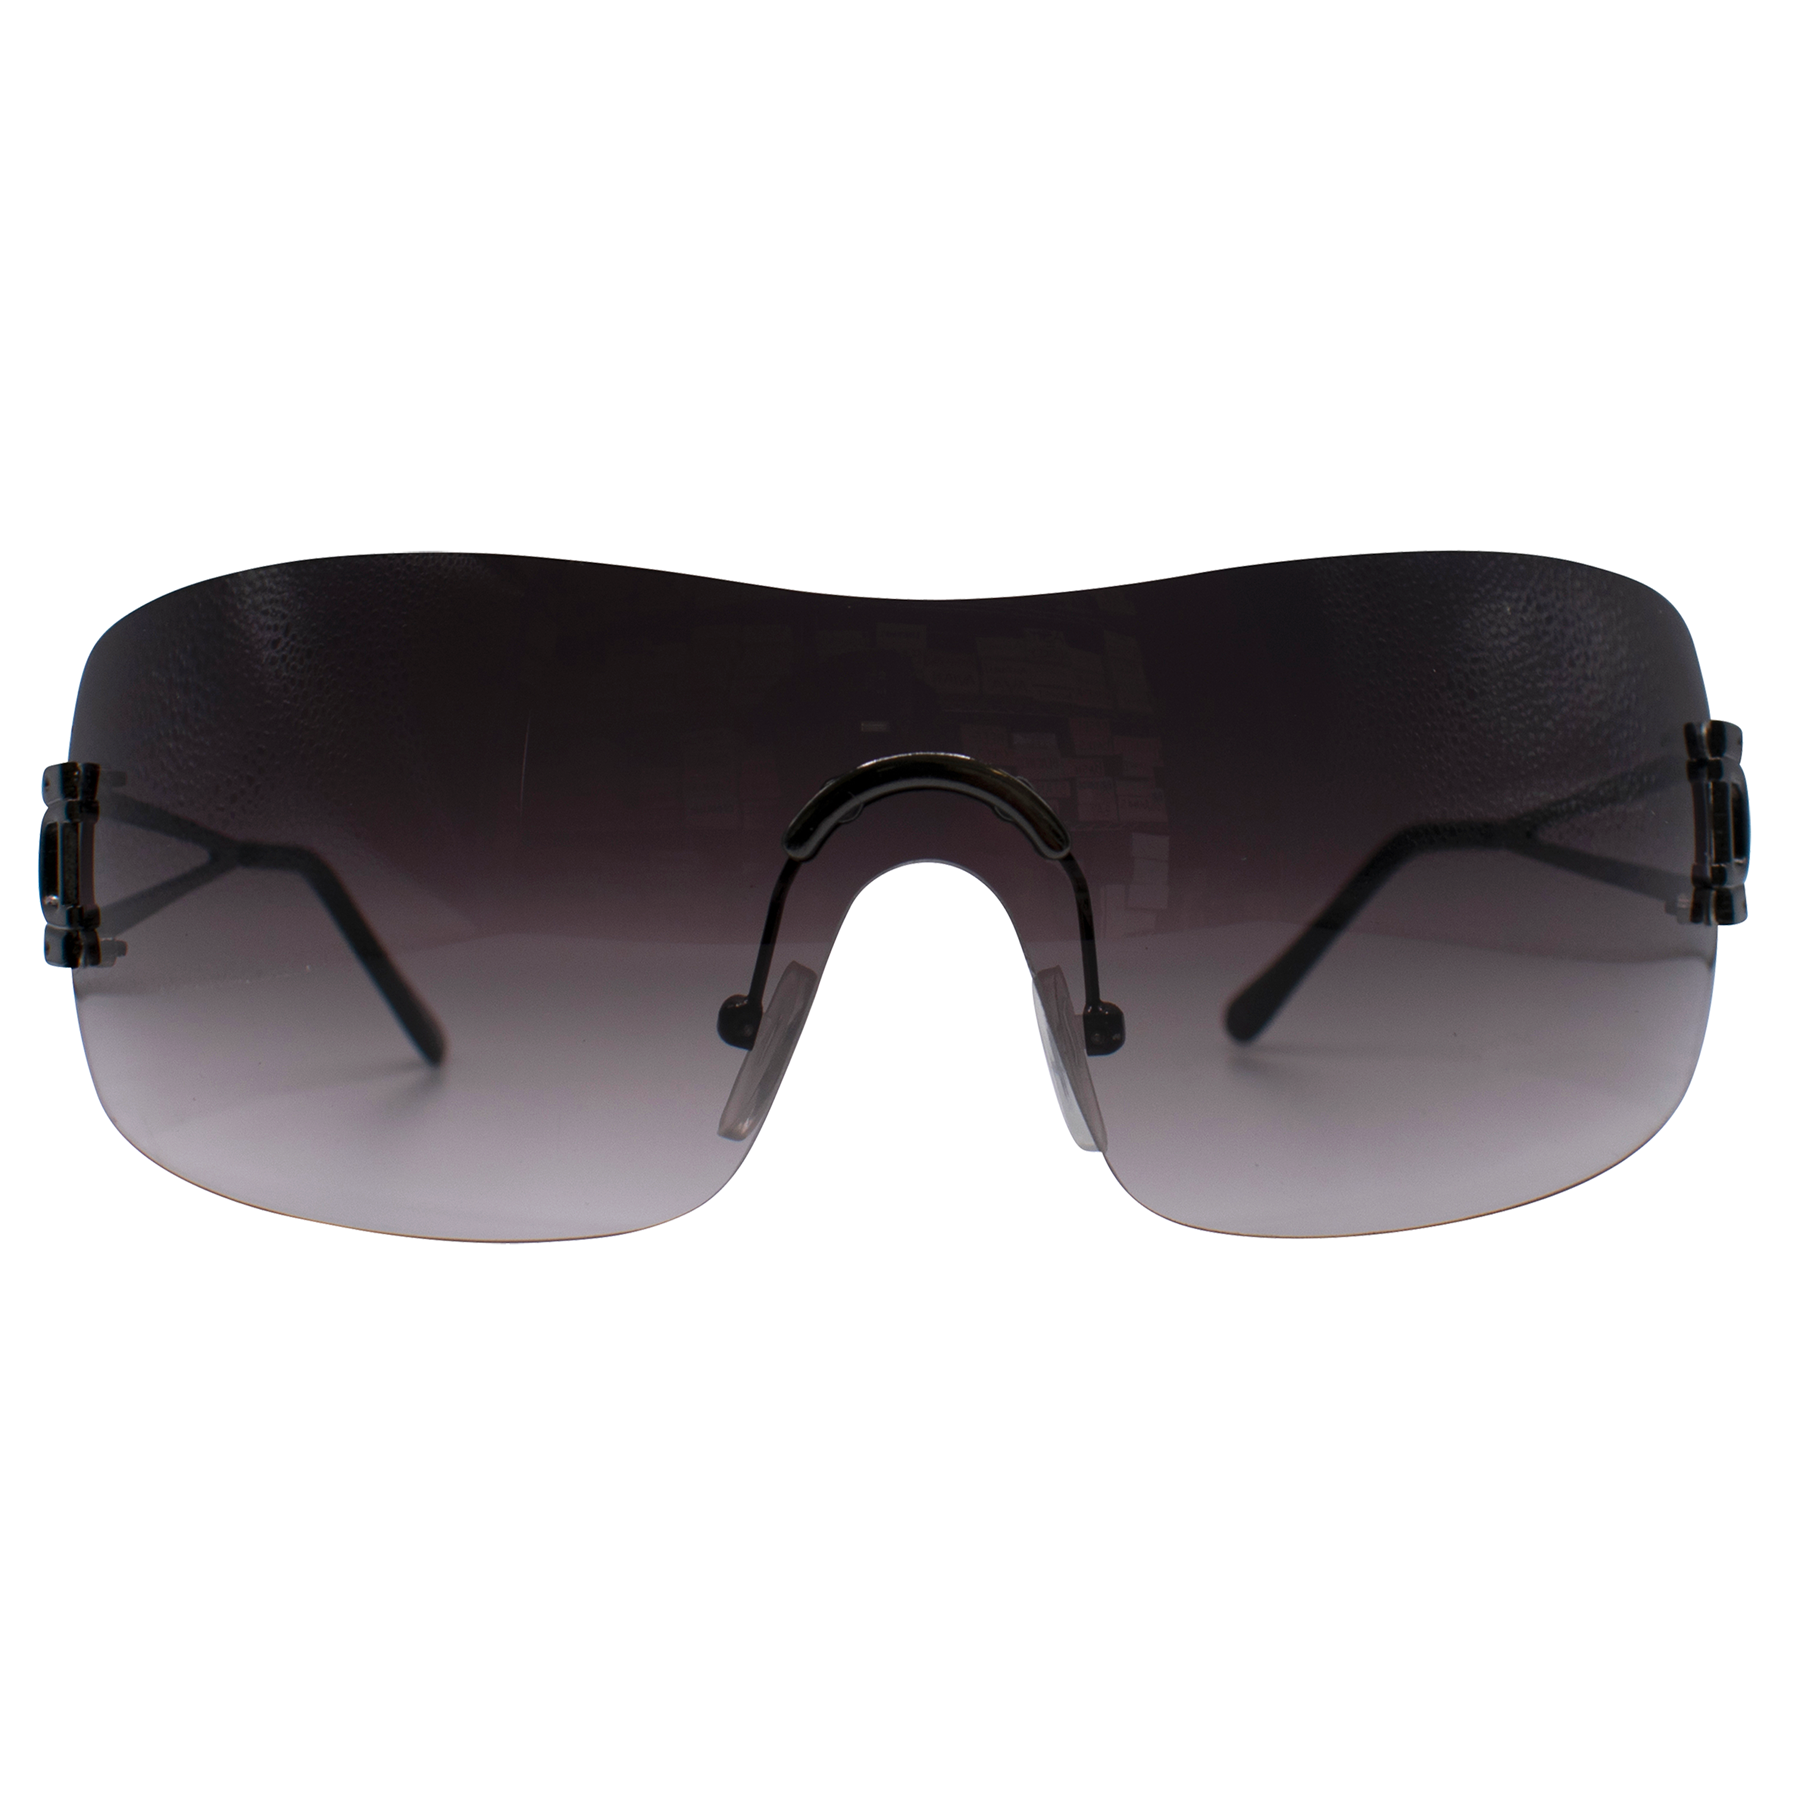 Chanel Women Sunglasses 4117-B Swarovski Crystal Brown Tortoise Frames with  Case